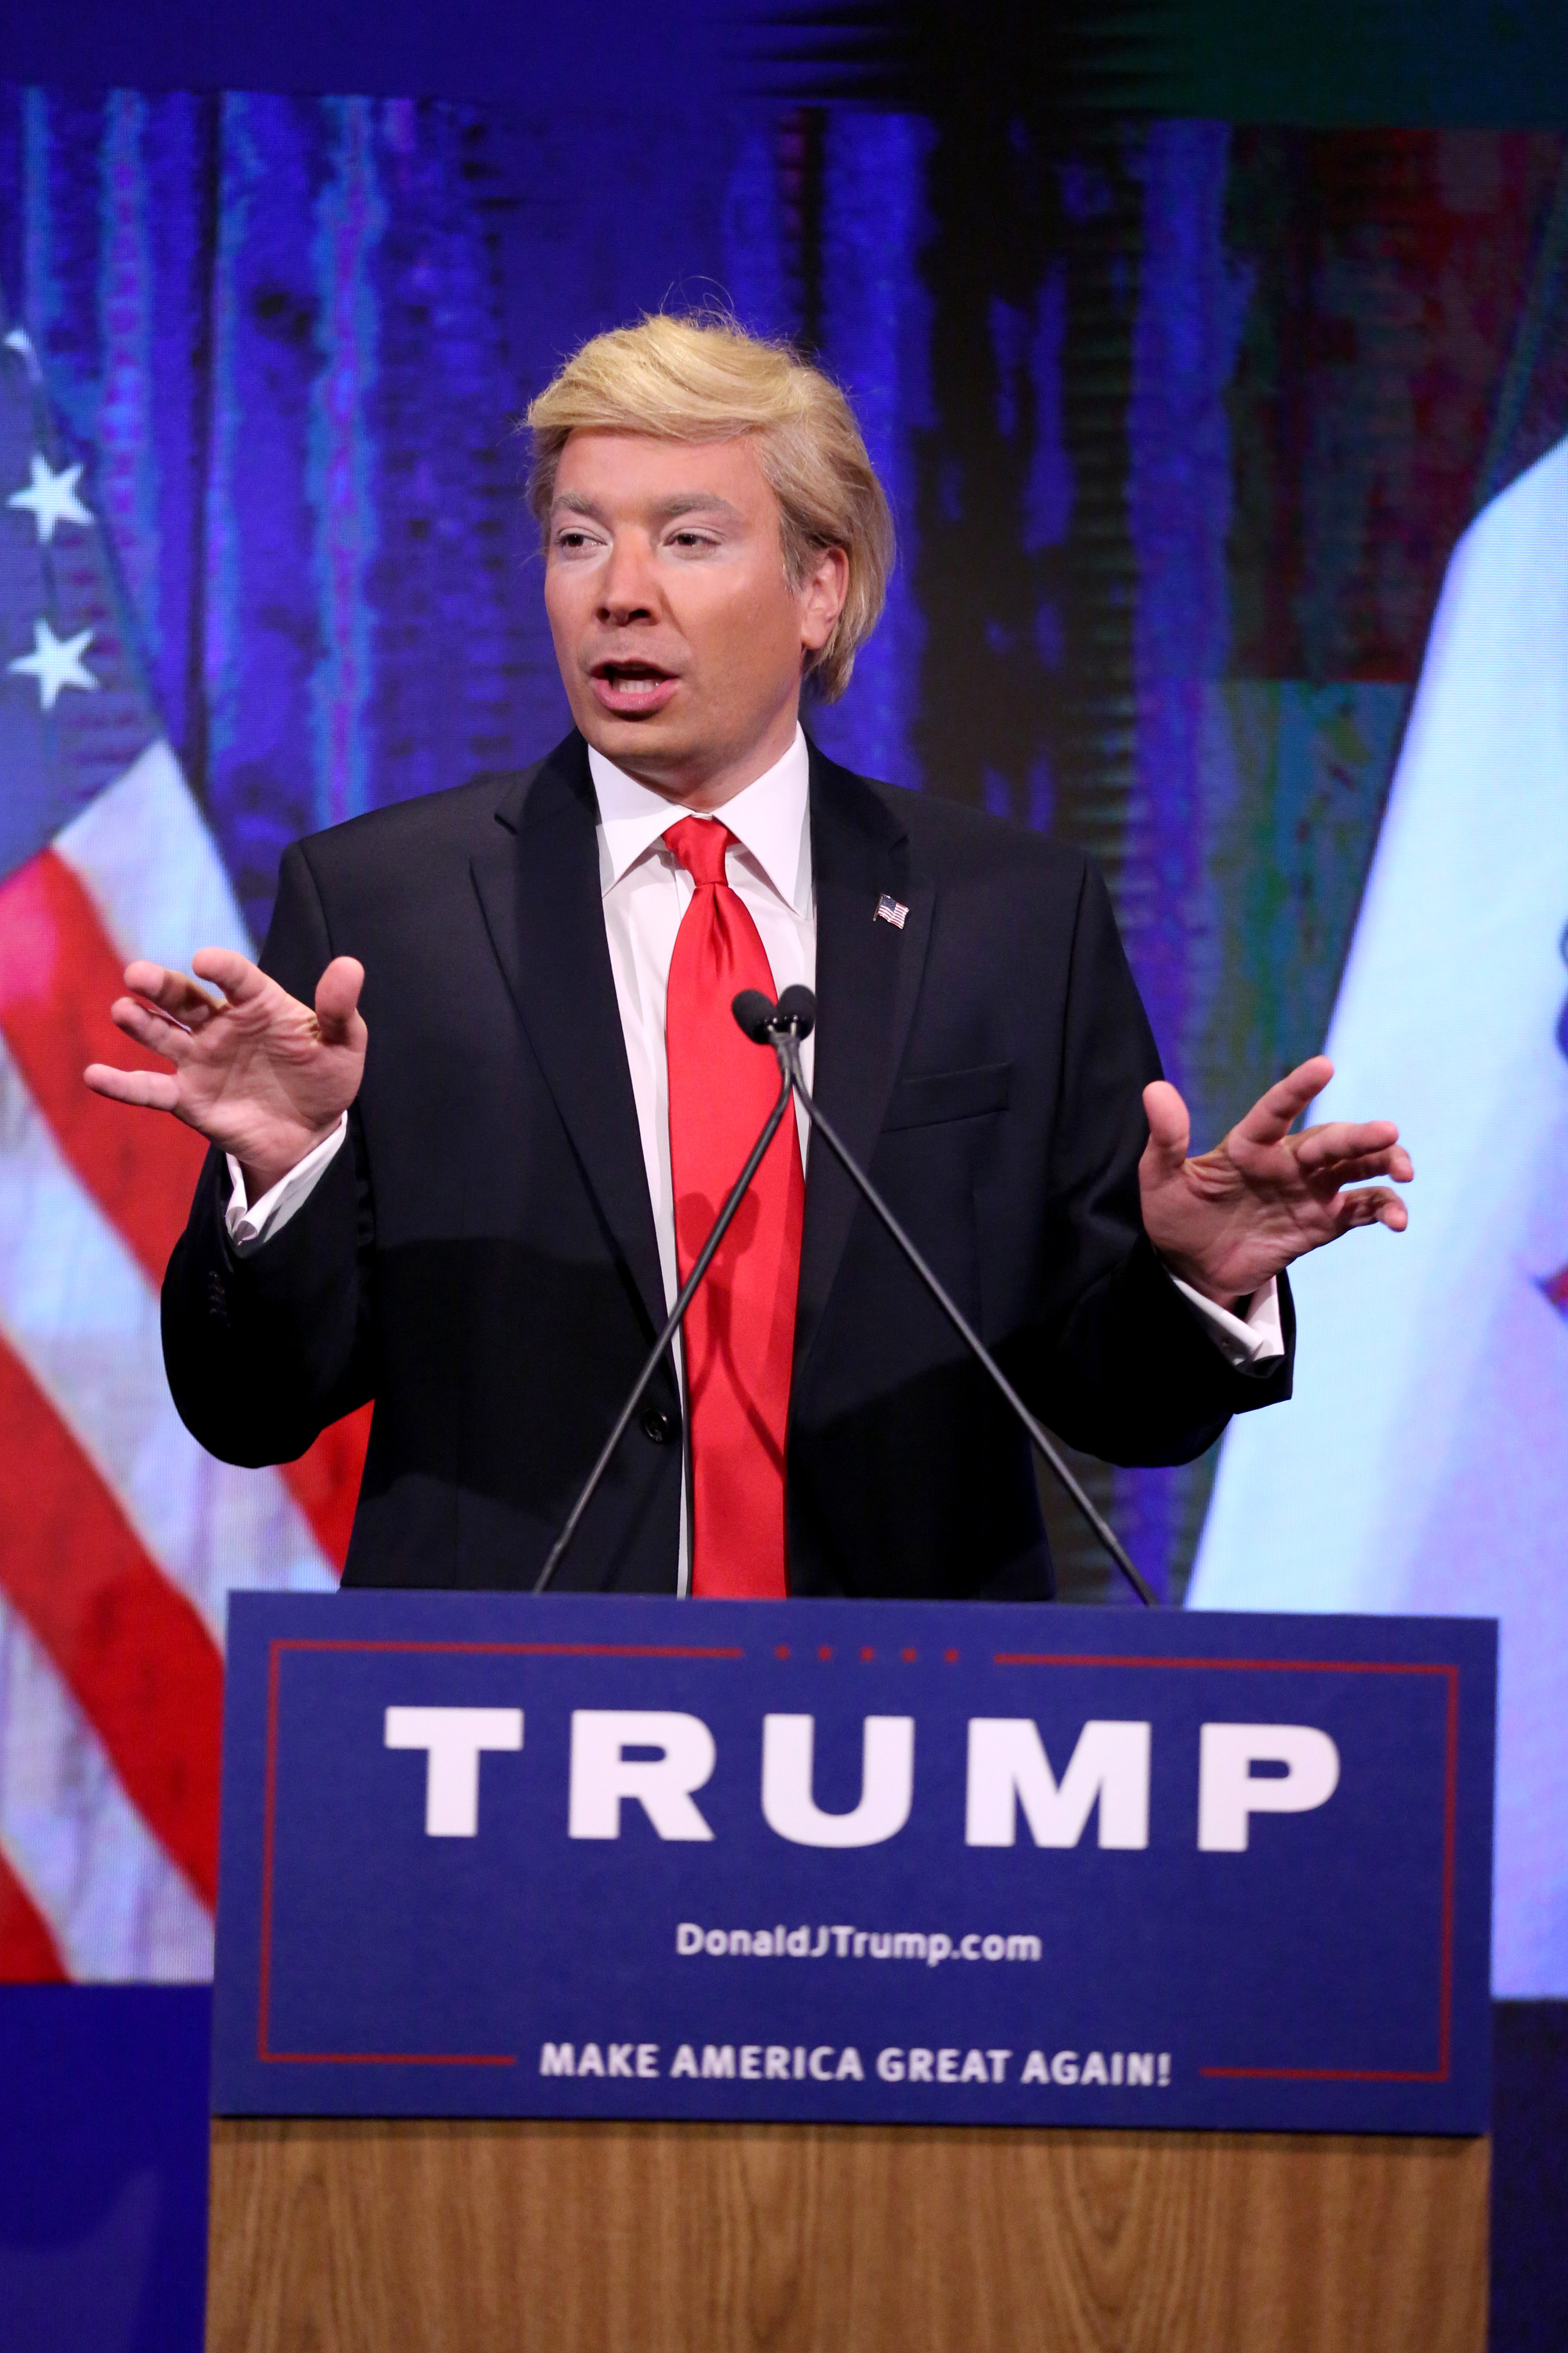 Jimmy Fallon dressed as Donald Trump on The Tonight Show Starring Jimmy Fallon on Feb. 3, 2016.